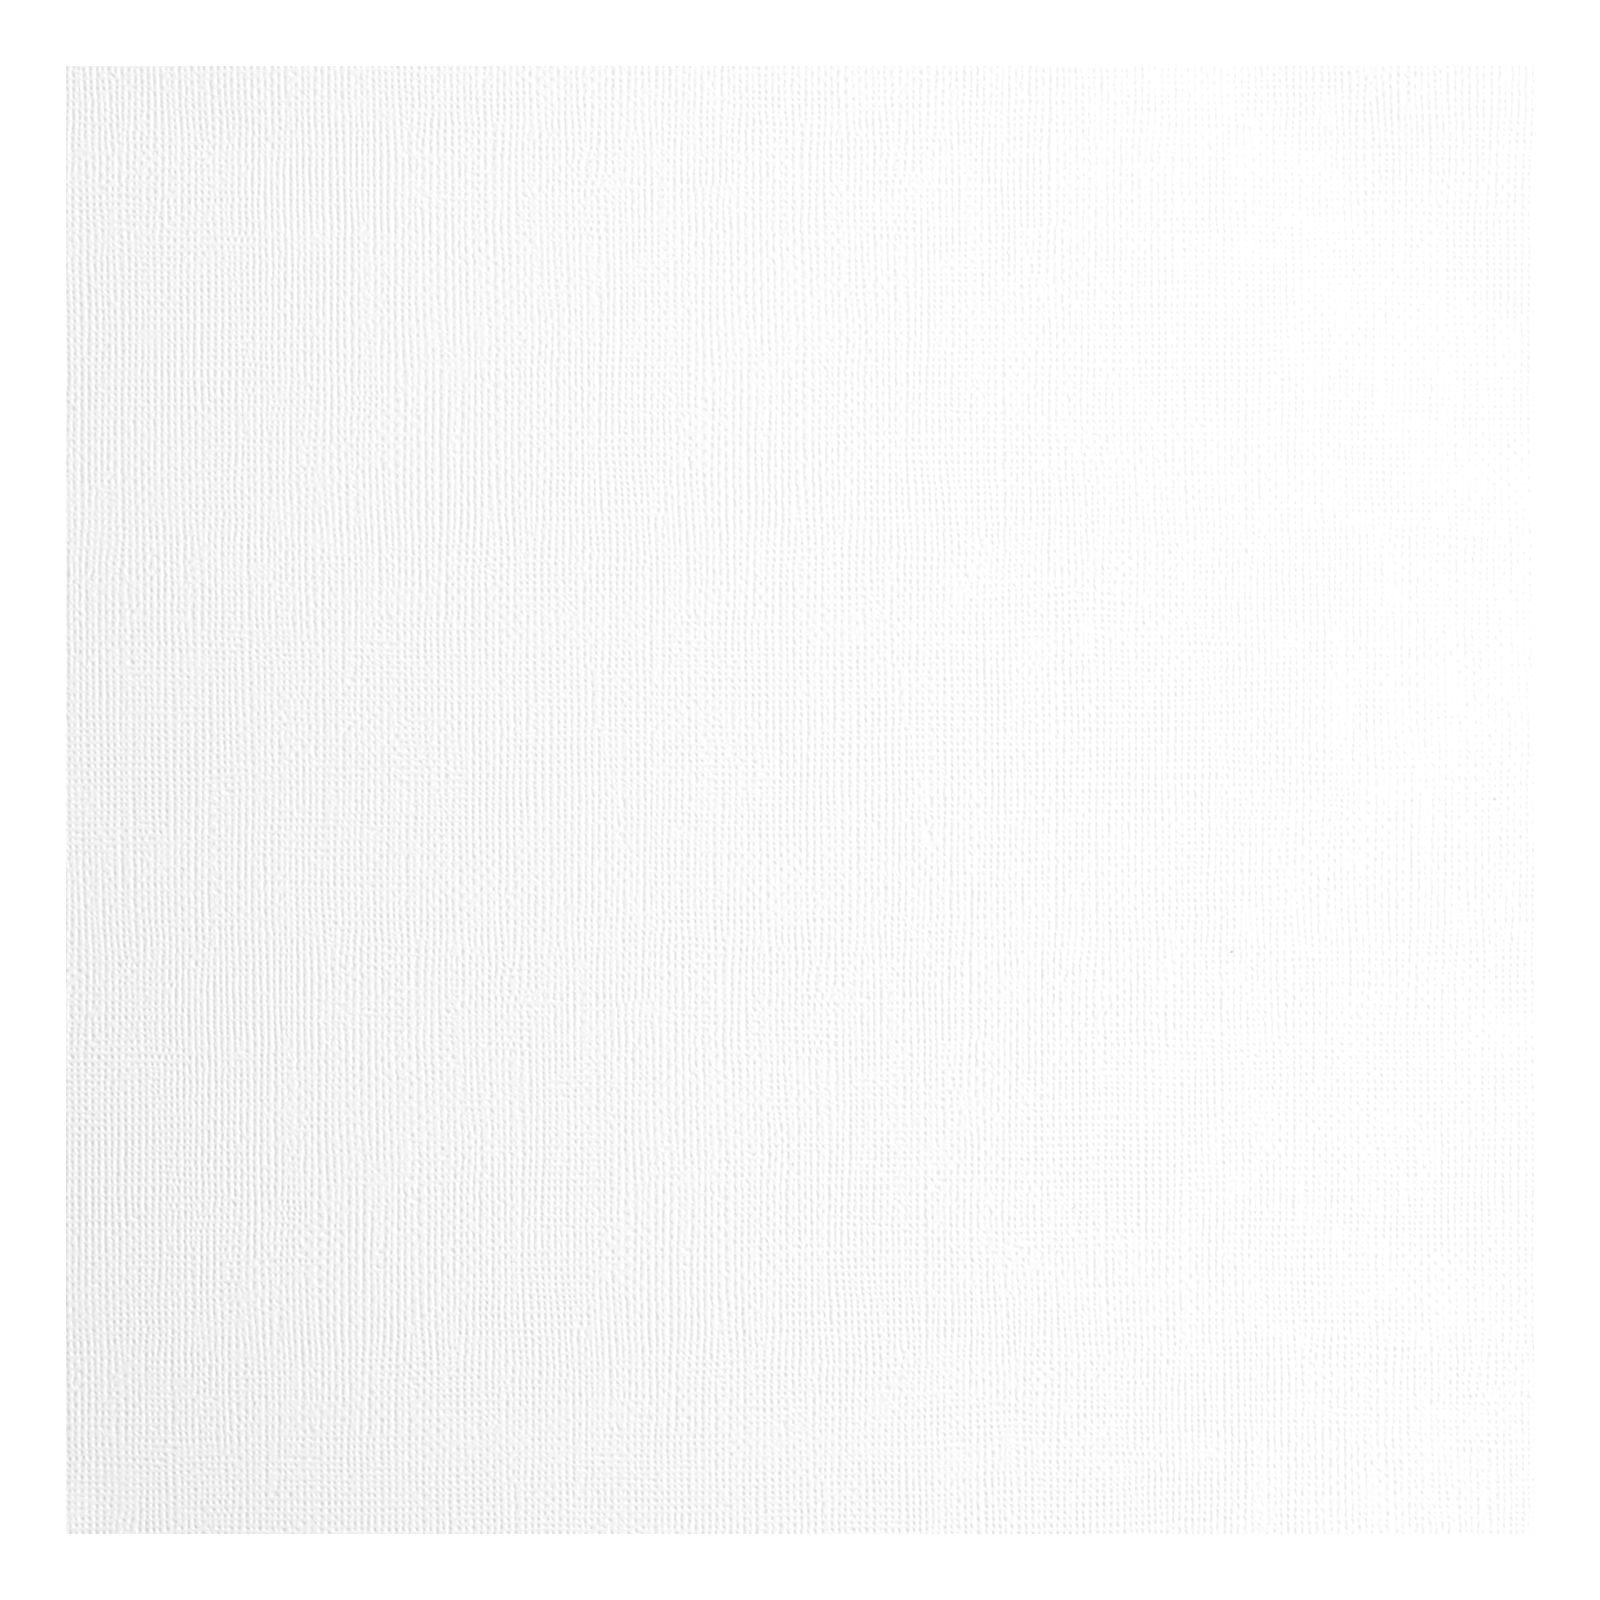 Florence • Cartoncino 216g Testurizzata 30,5x30,5cm White 20x